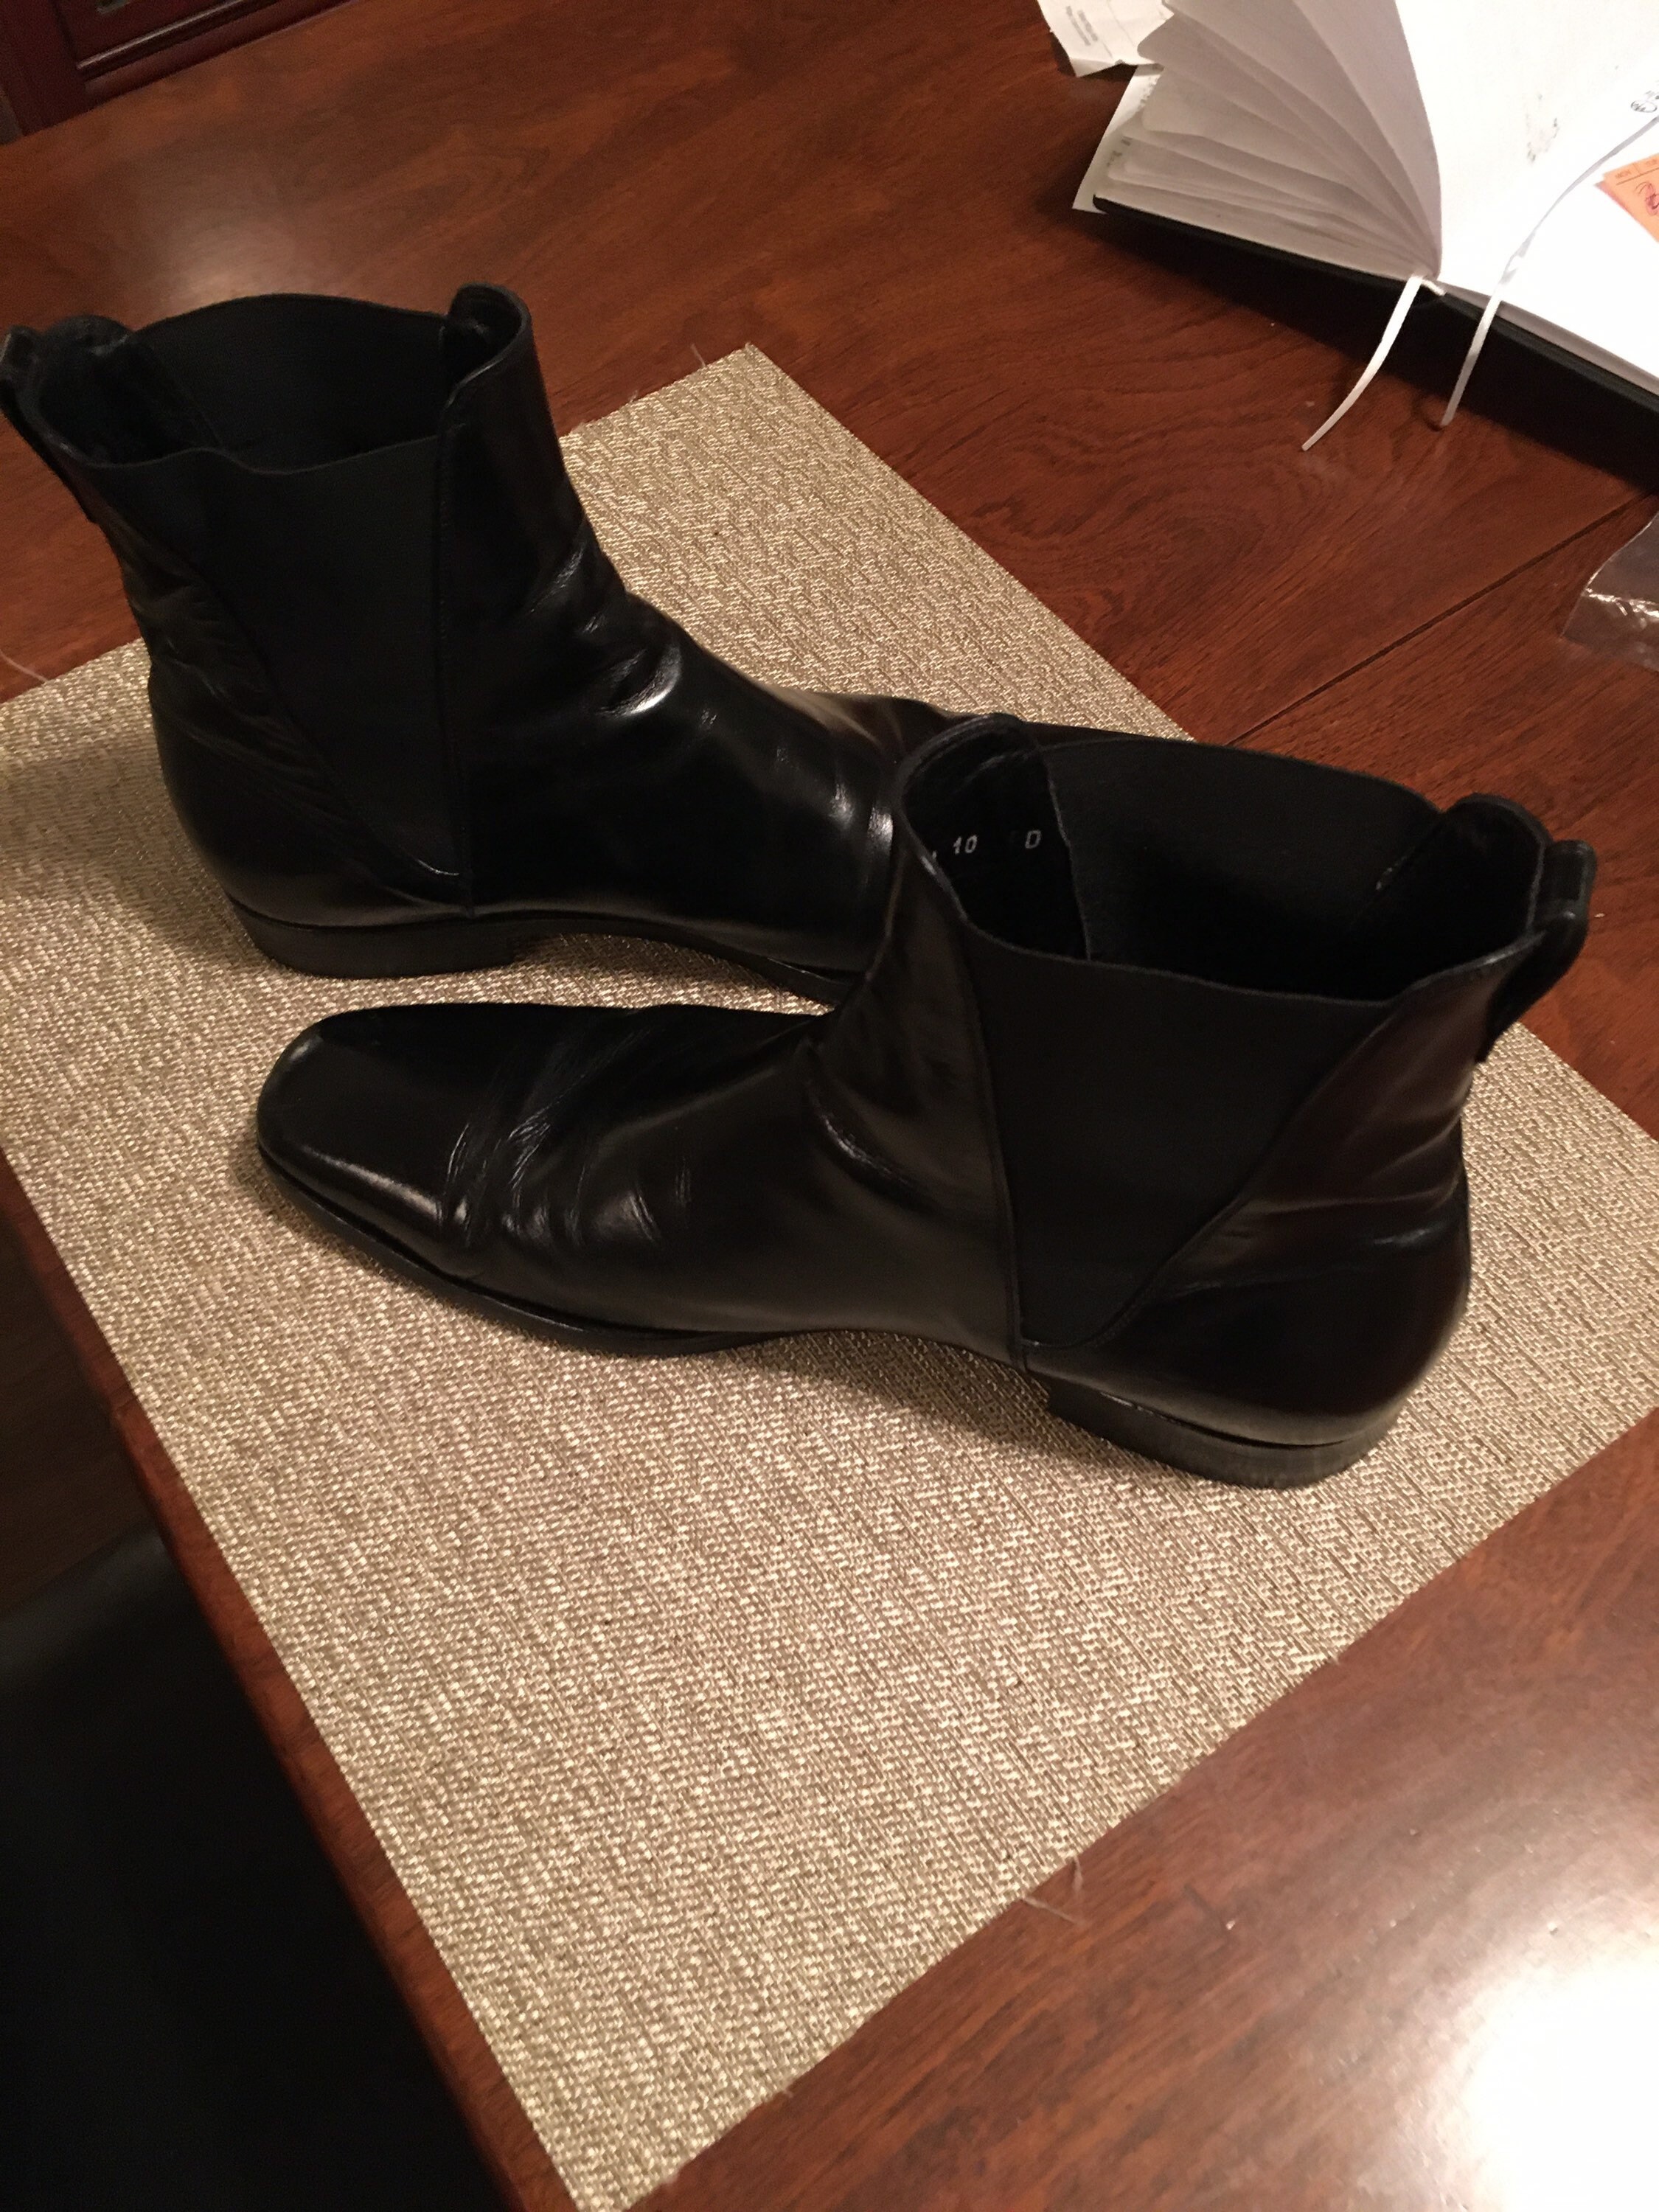 Men’s Ferragamo black boots like new condition. size10D Schoenen Herenschoenen Laarzen Nette laarzen slip on boot 